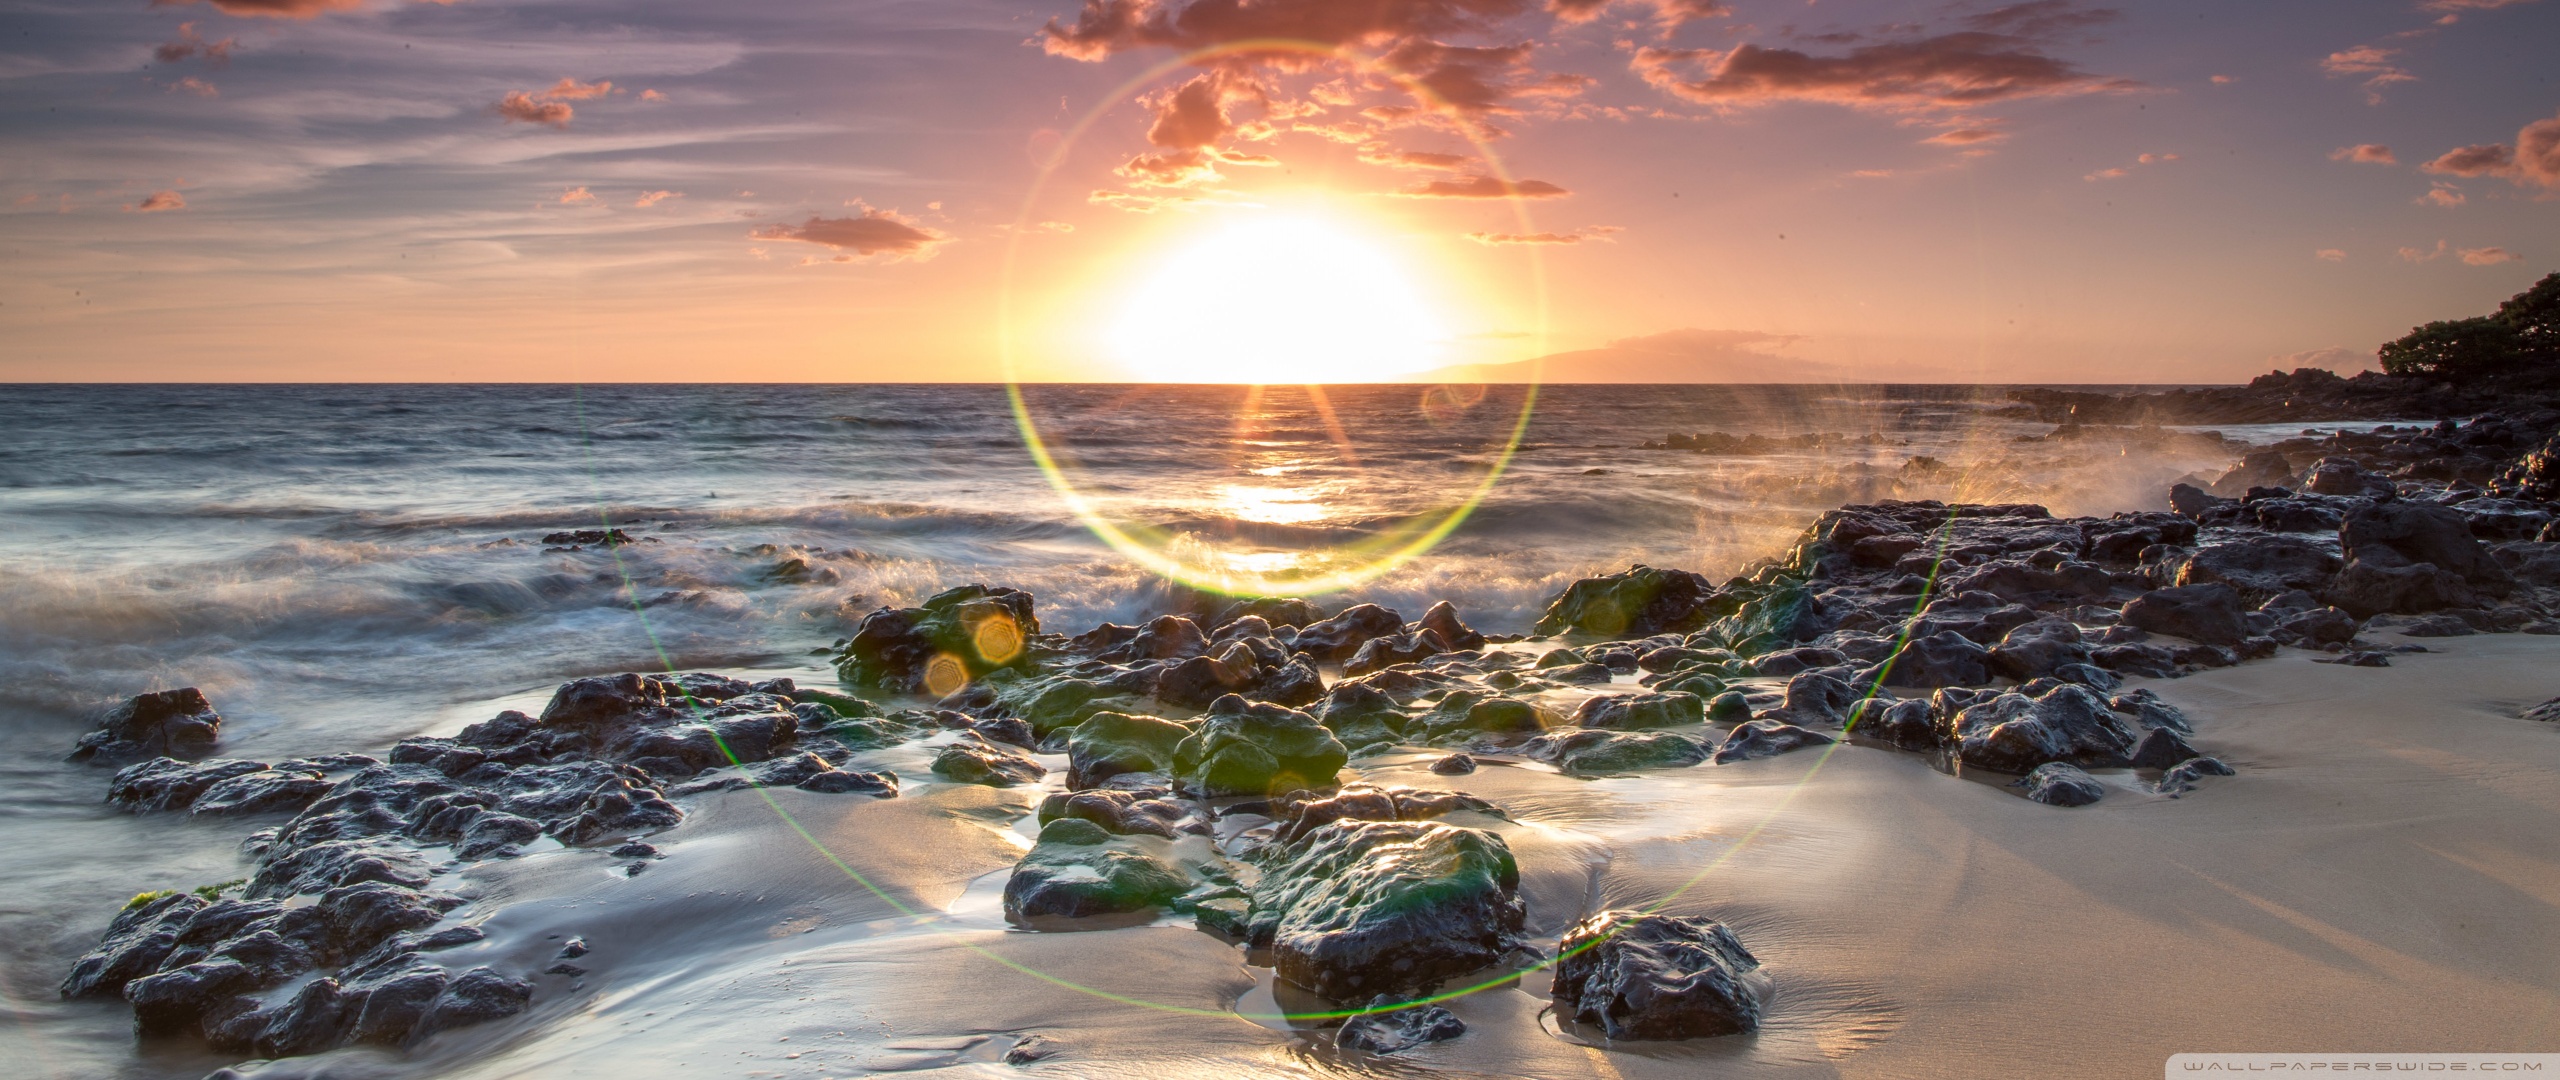 Wallpaper ID 678968  blue Sunset Beach Maui Hawaii skies USA  1080P Secret free download